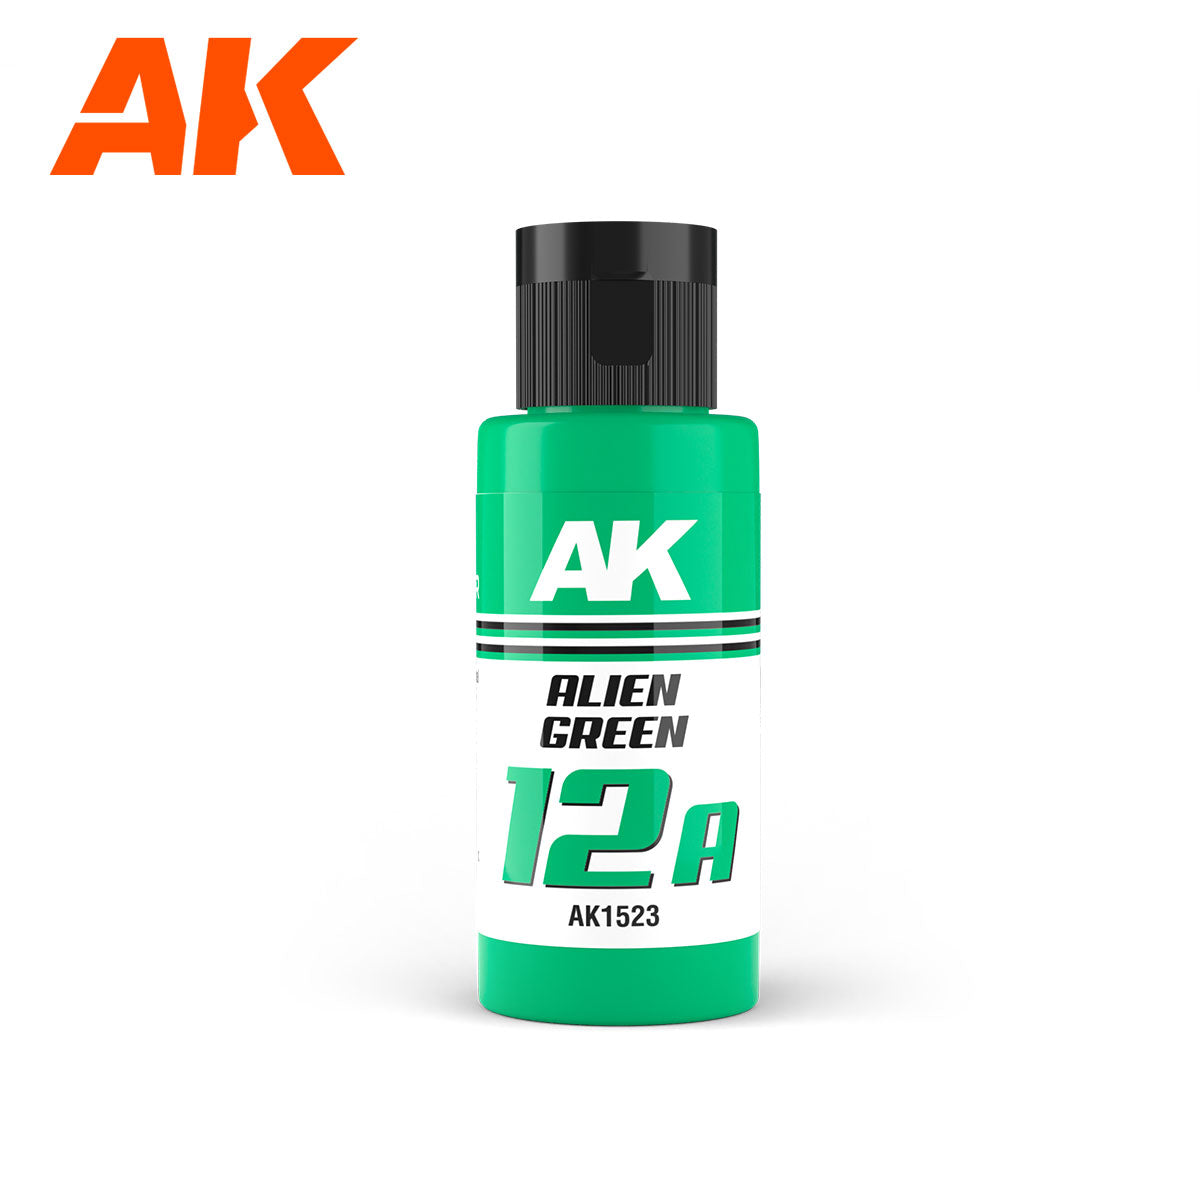 AK Interactive Galaxy Green & Chaos Green Dual Exo Paint Set 13